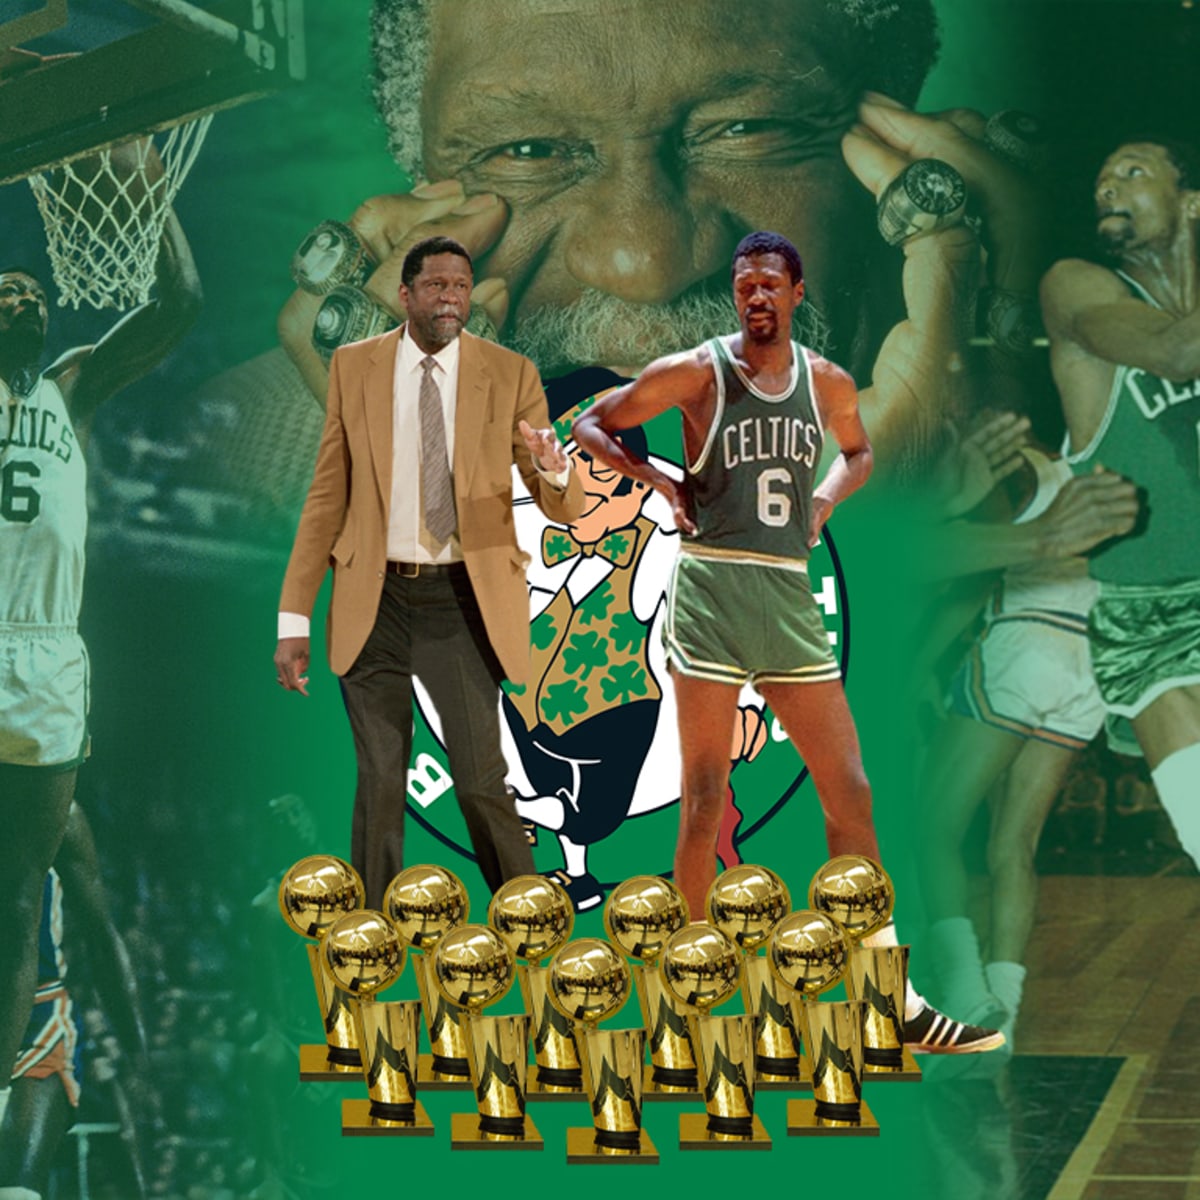 6 BILL RUSSELL Boston Celtics NBA Center Green Throwback Jersey